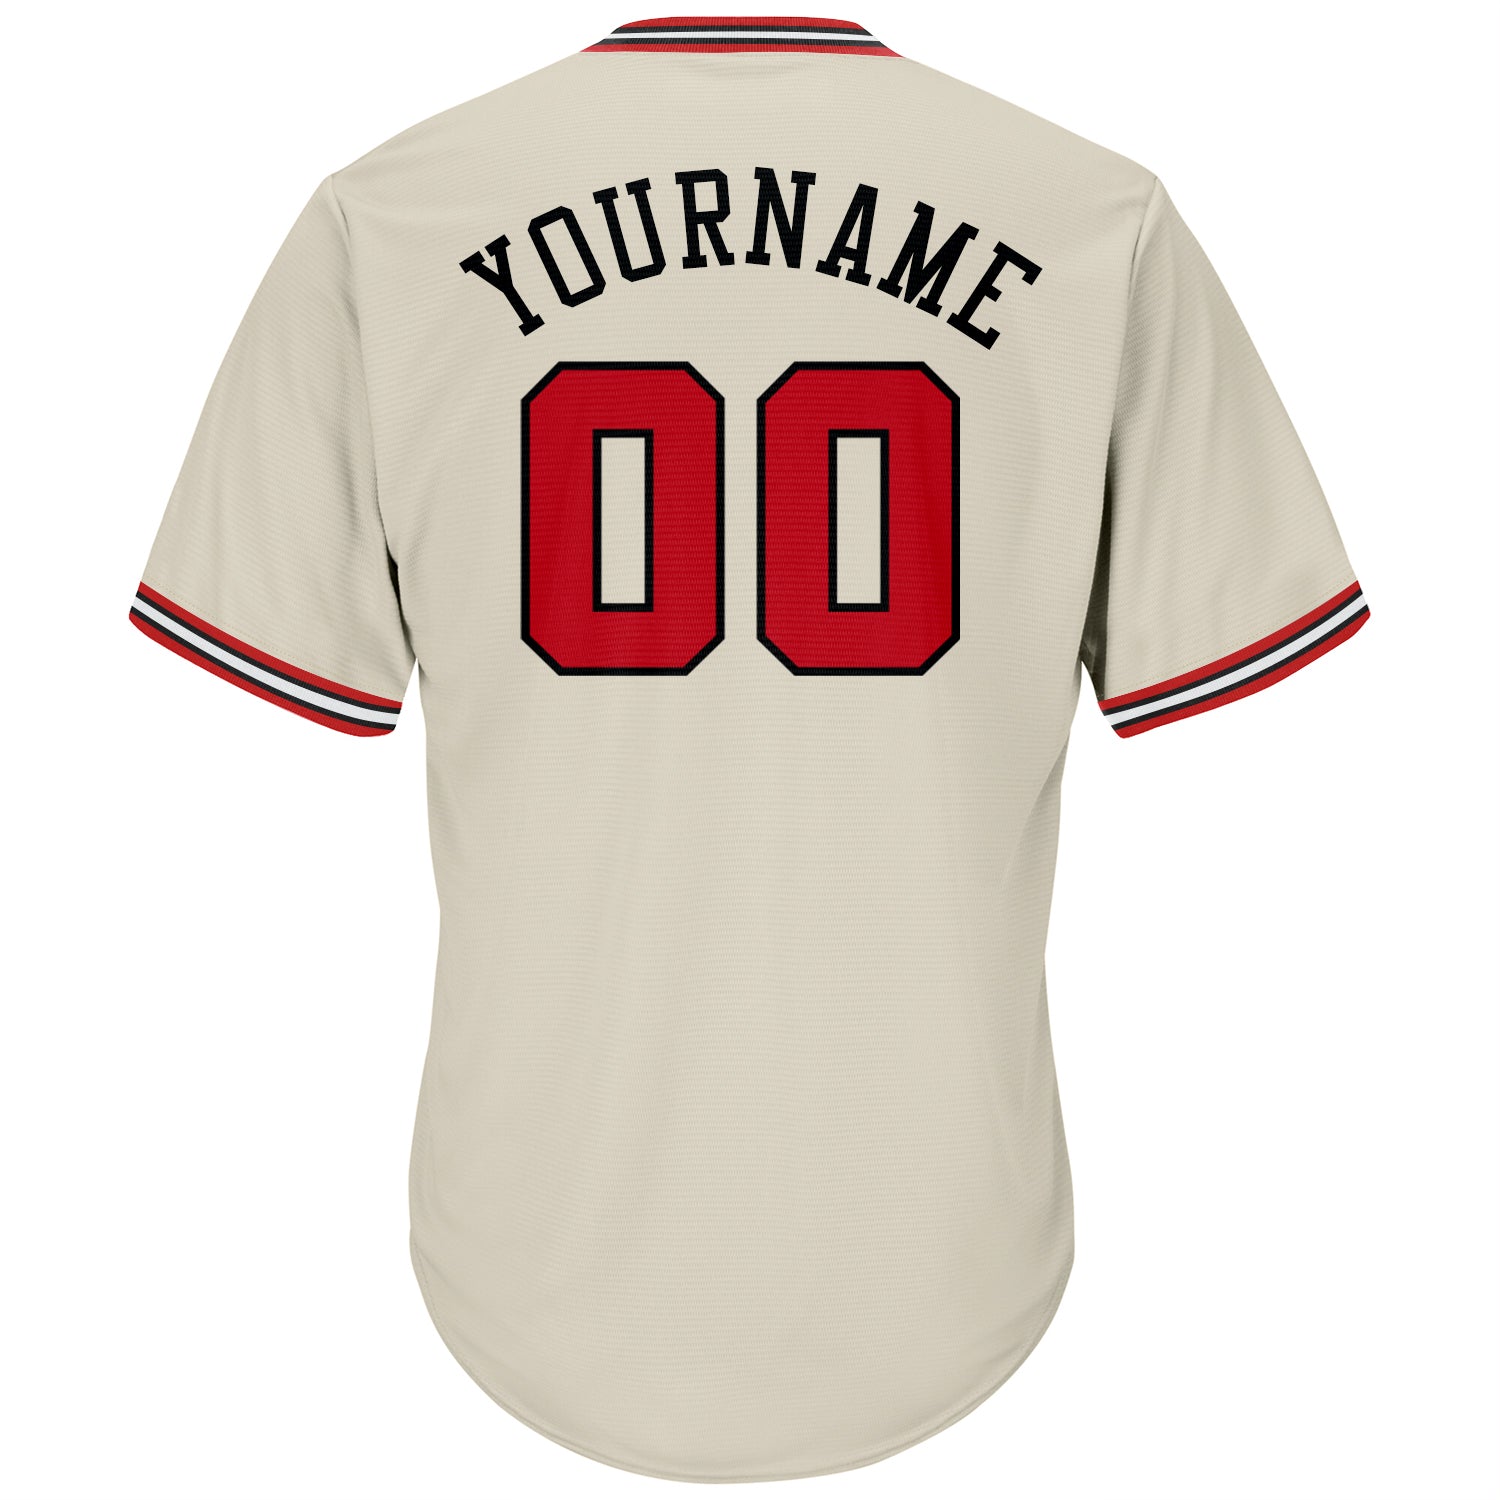 Blank Red Baseball Jersey  Baseball jerseys, Custom baseball